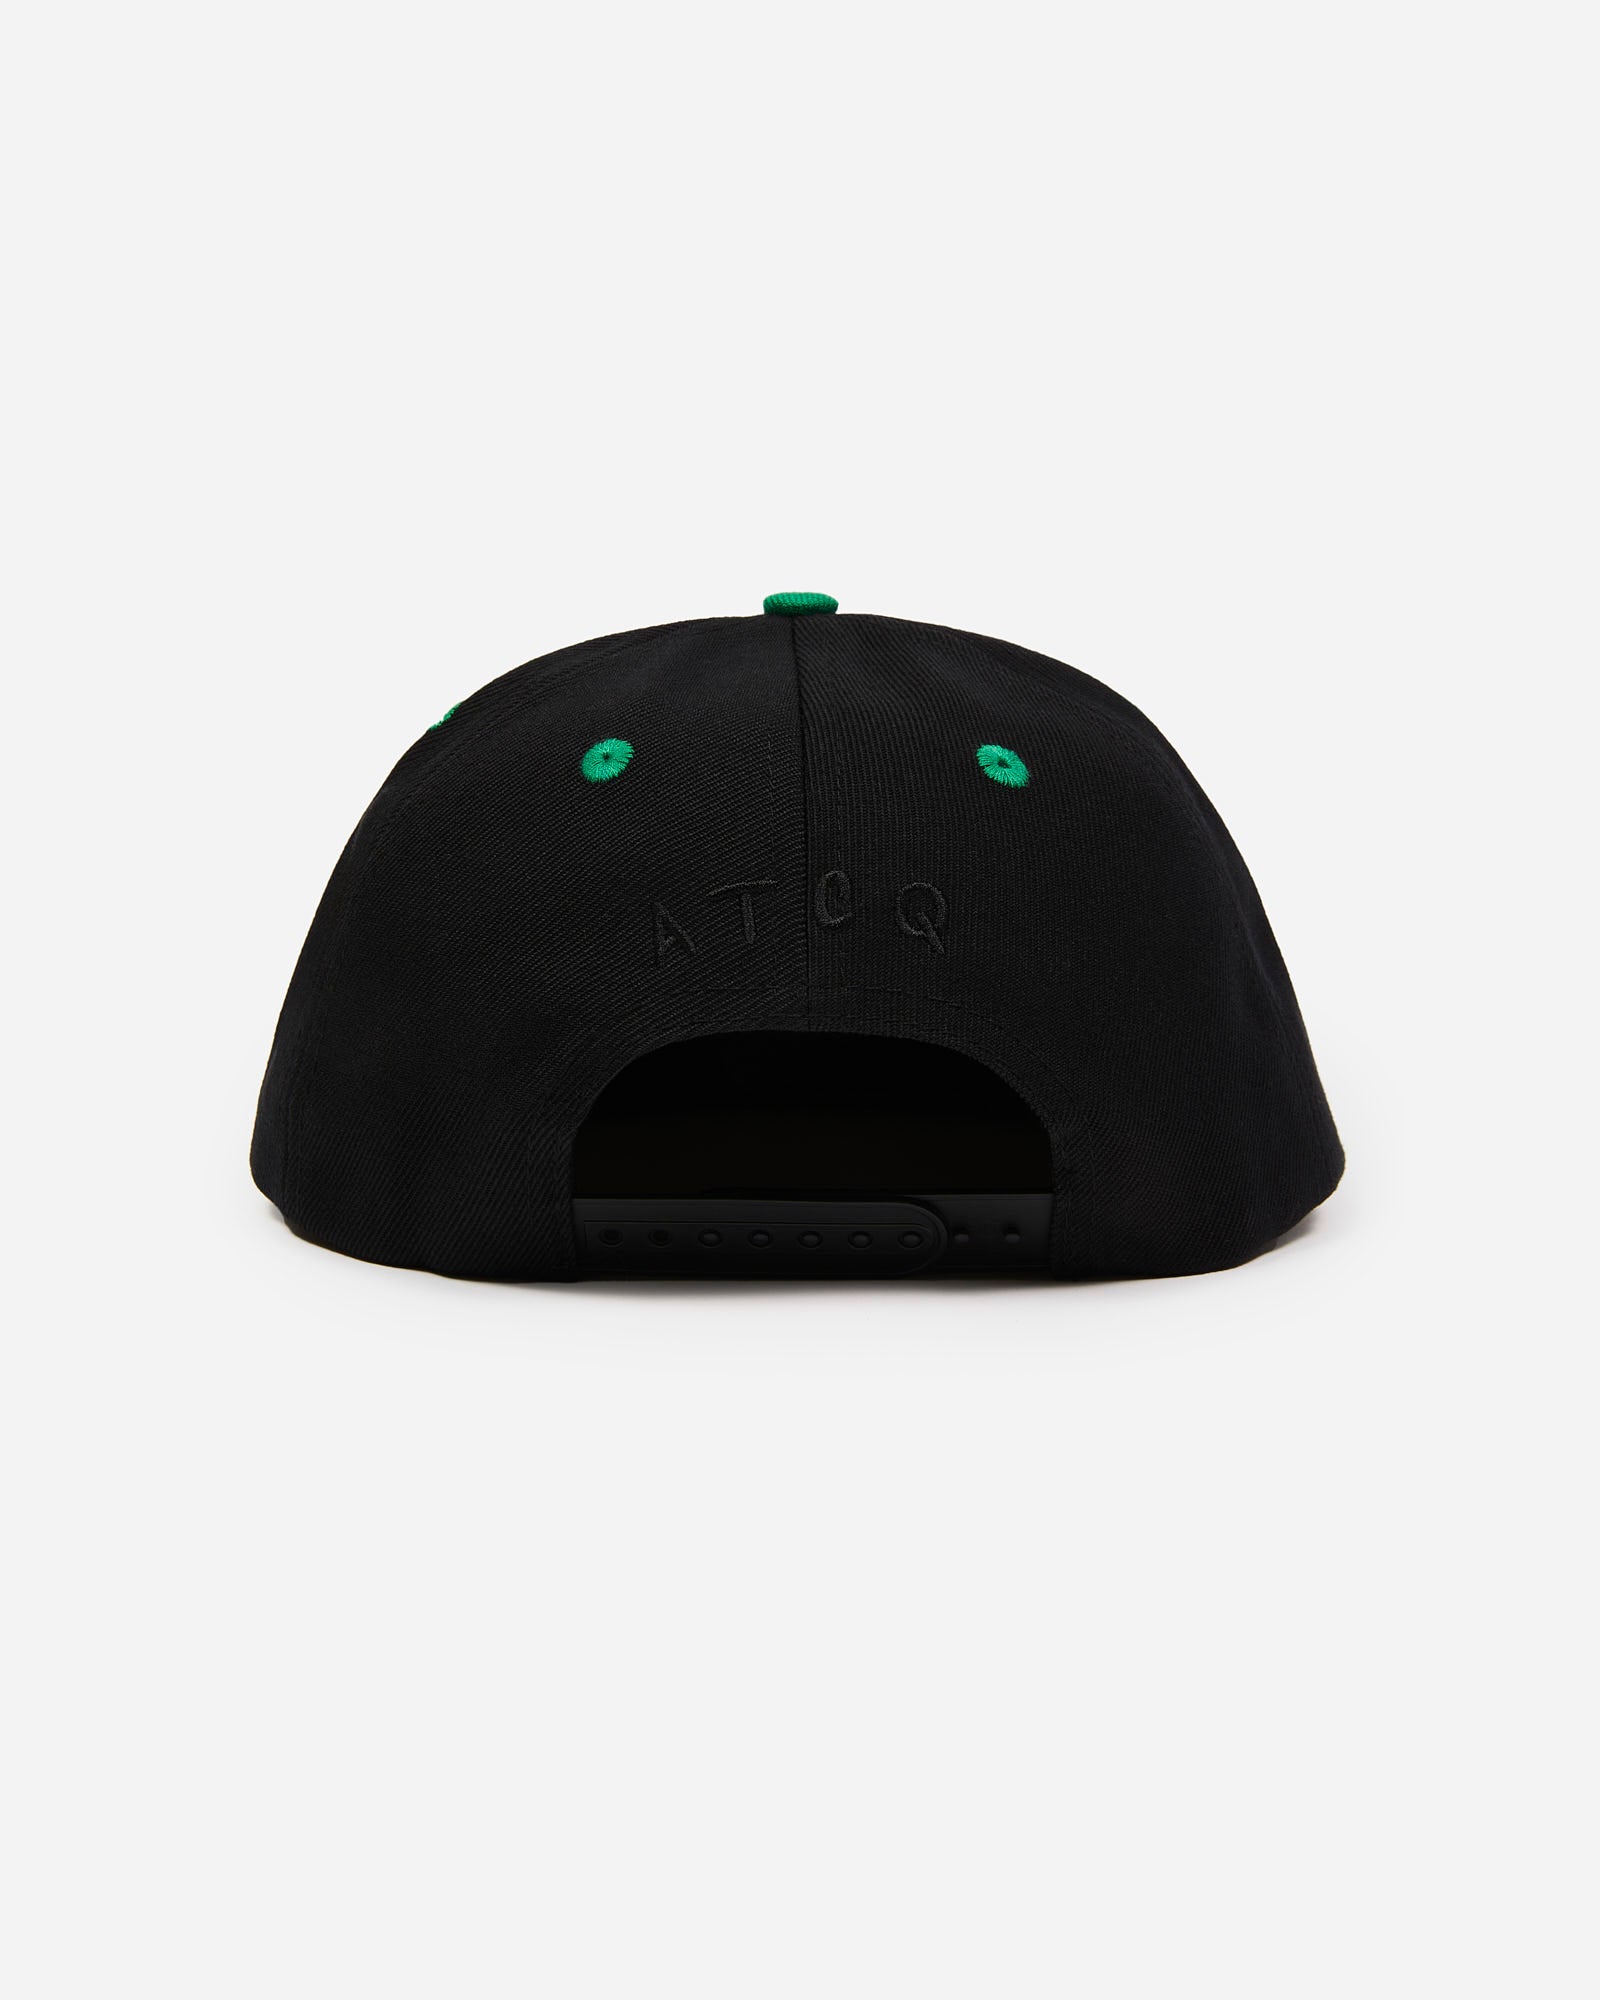 ATCQ Two Tone Snapback Green Hat